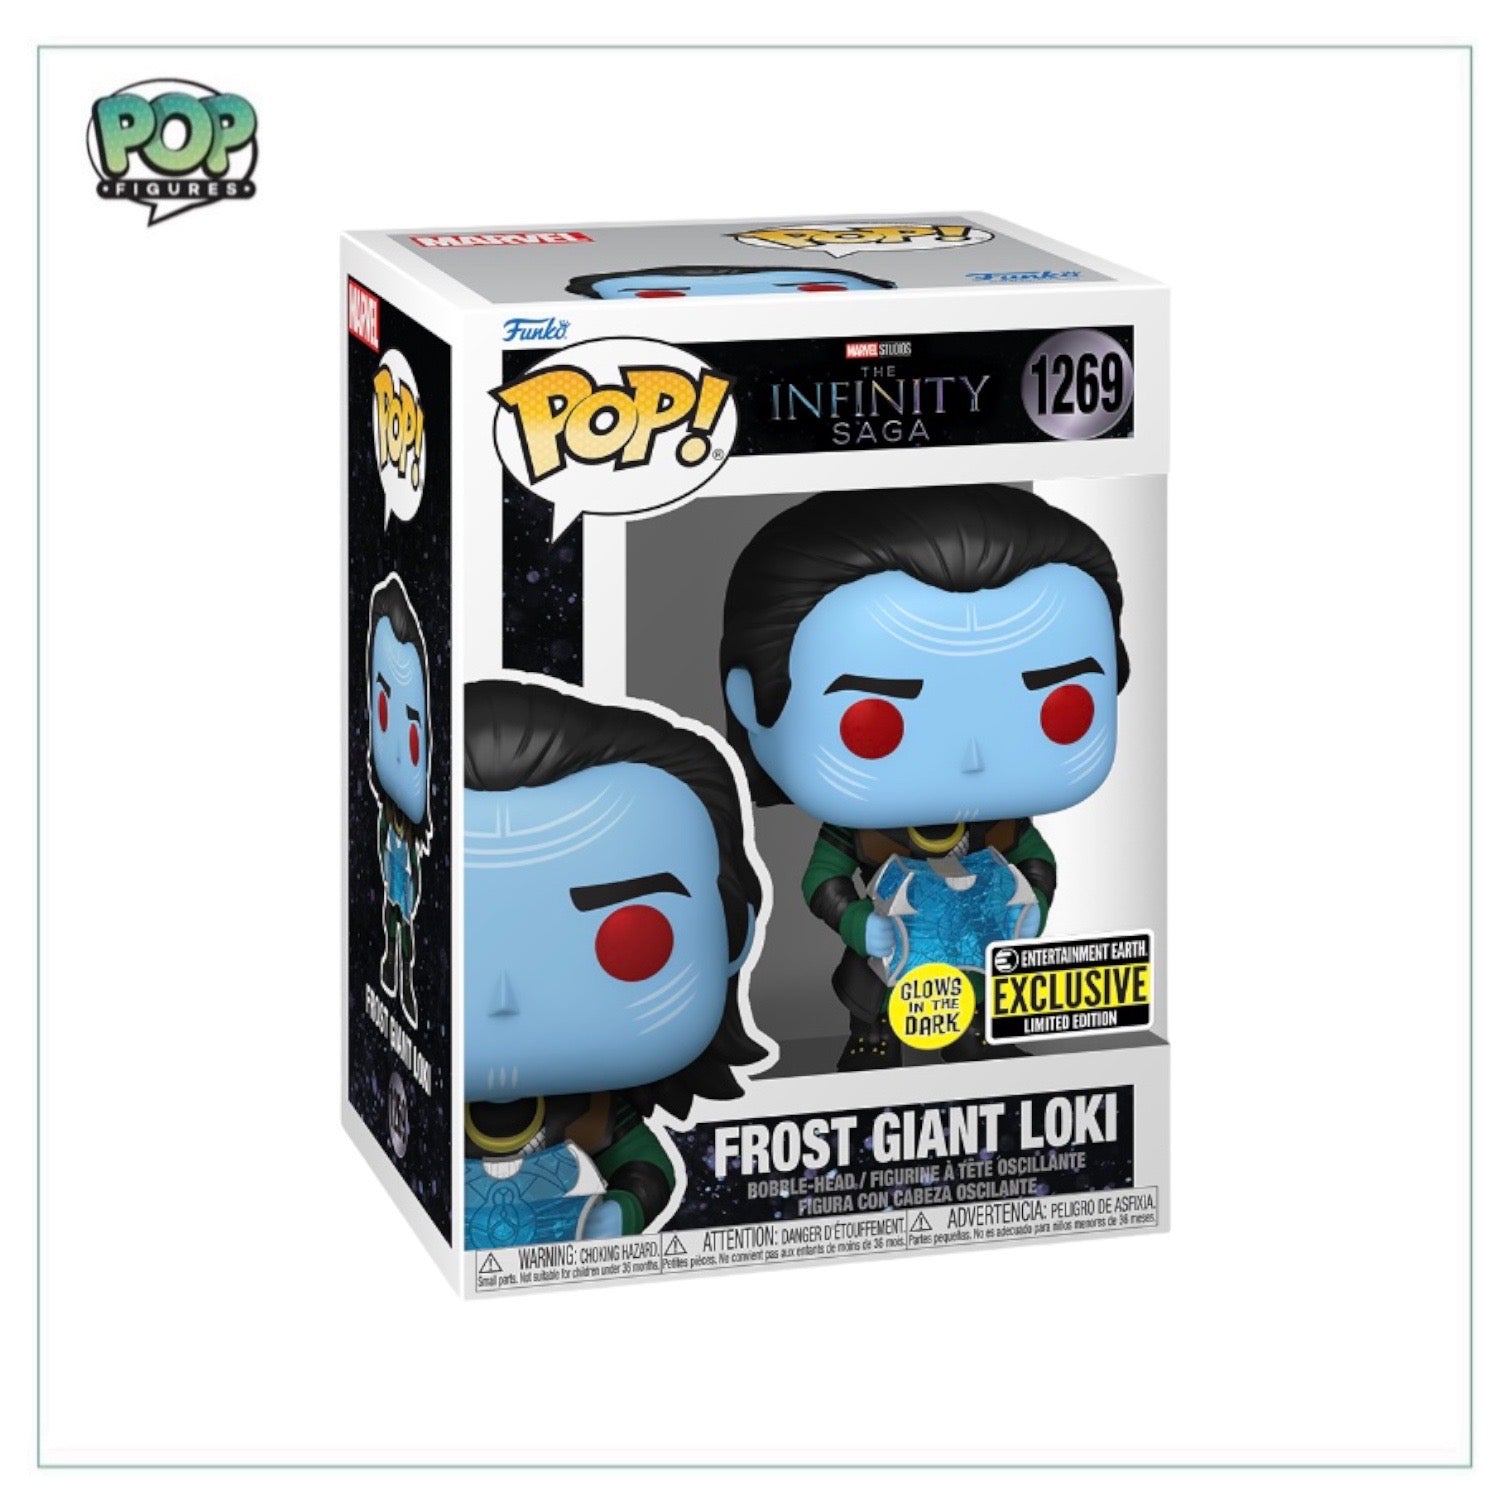 Frost Giant Loki #1269 (Glows in the Dark) Funko Pop! - Infinity Saga - Entertainment Earth Exclusive